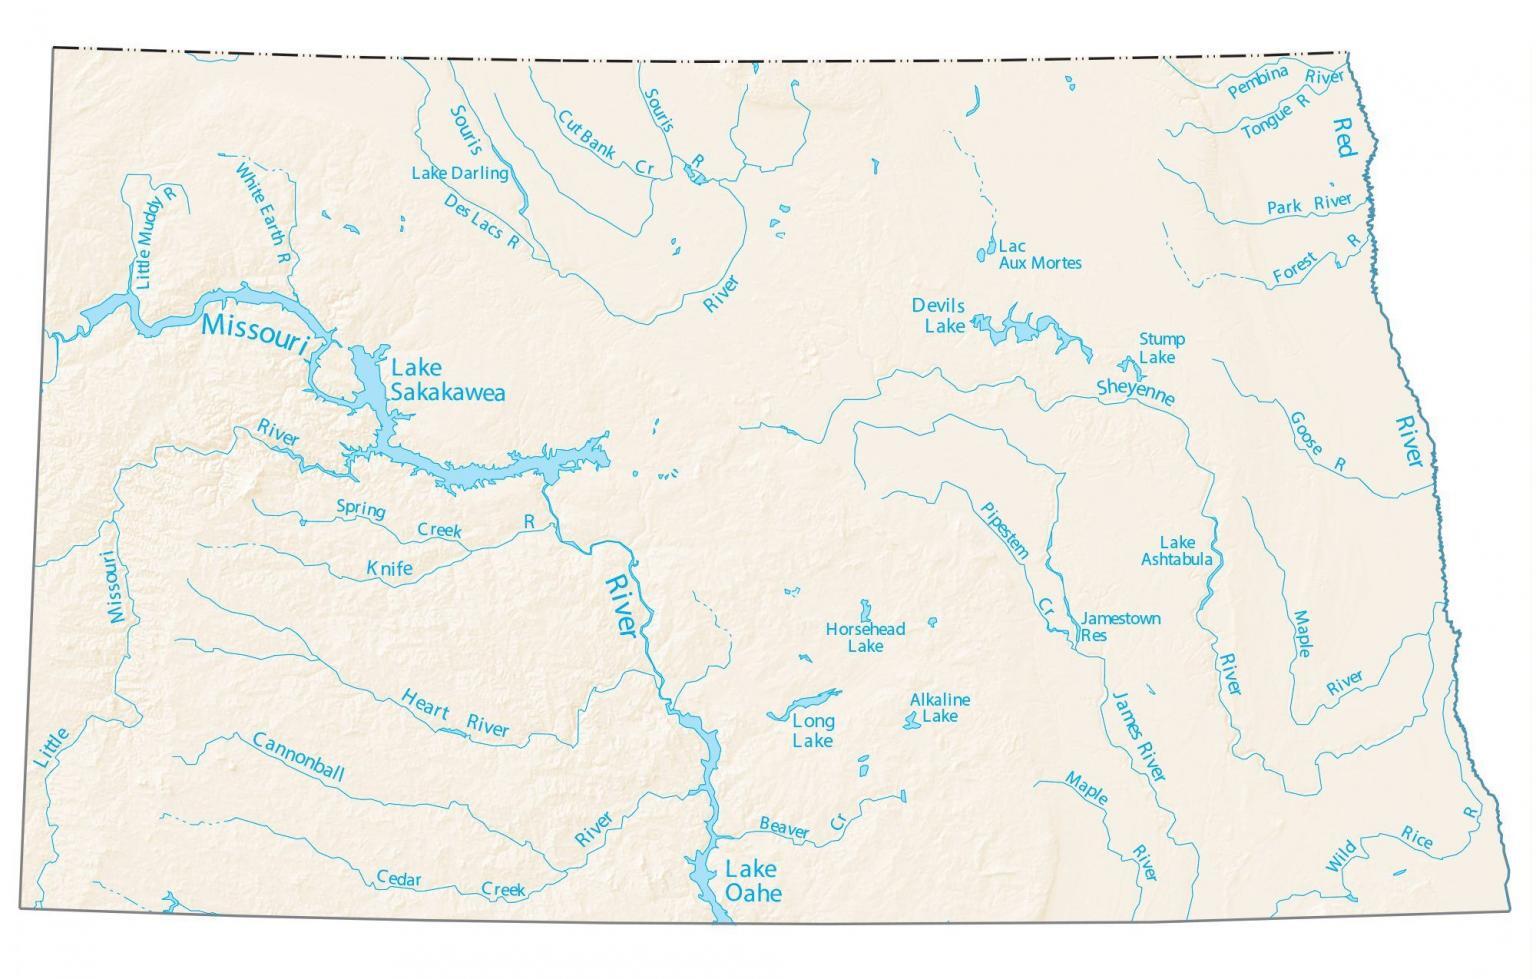 North Dakota Lakes and Rivers Map - GIS Geography